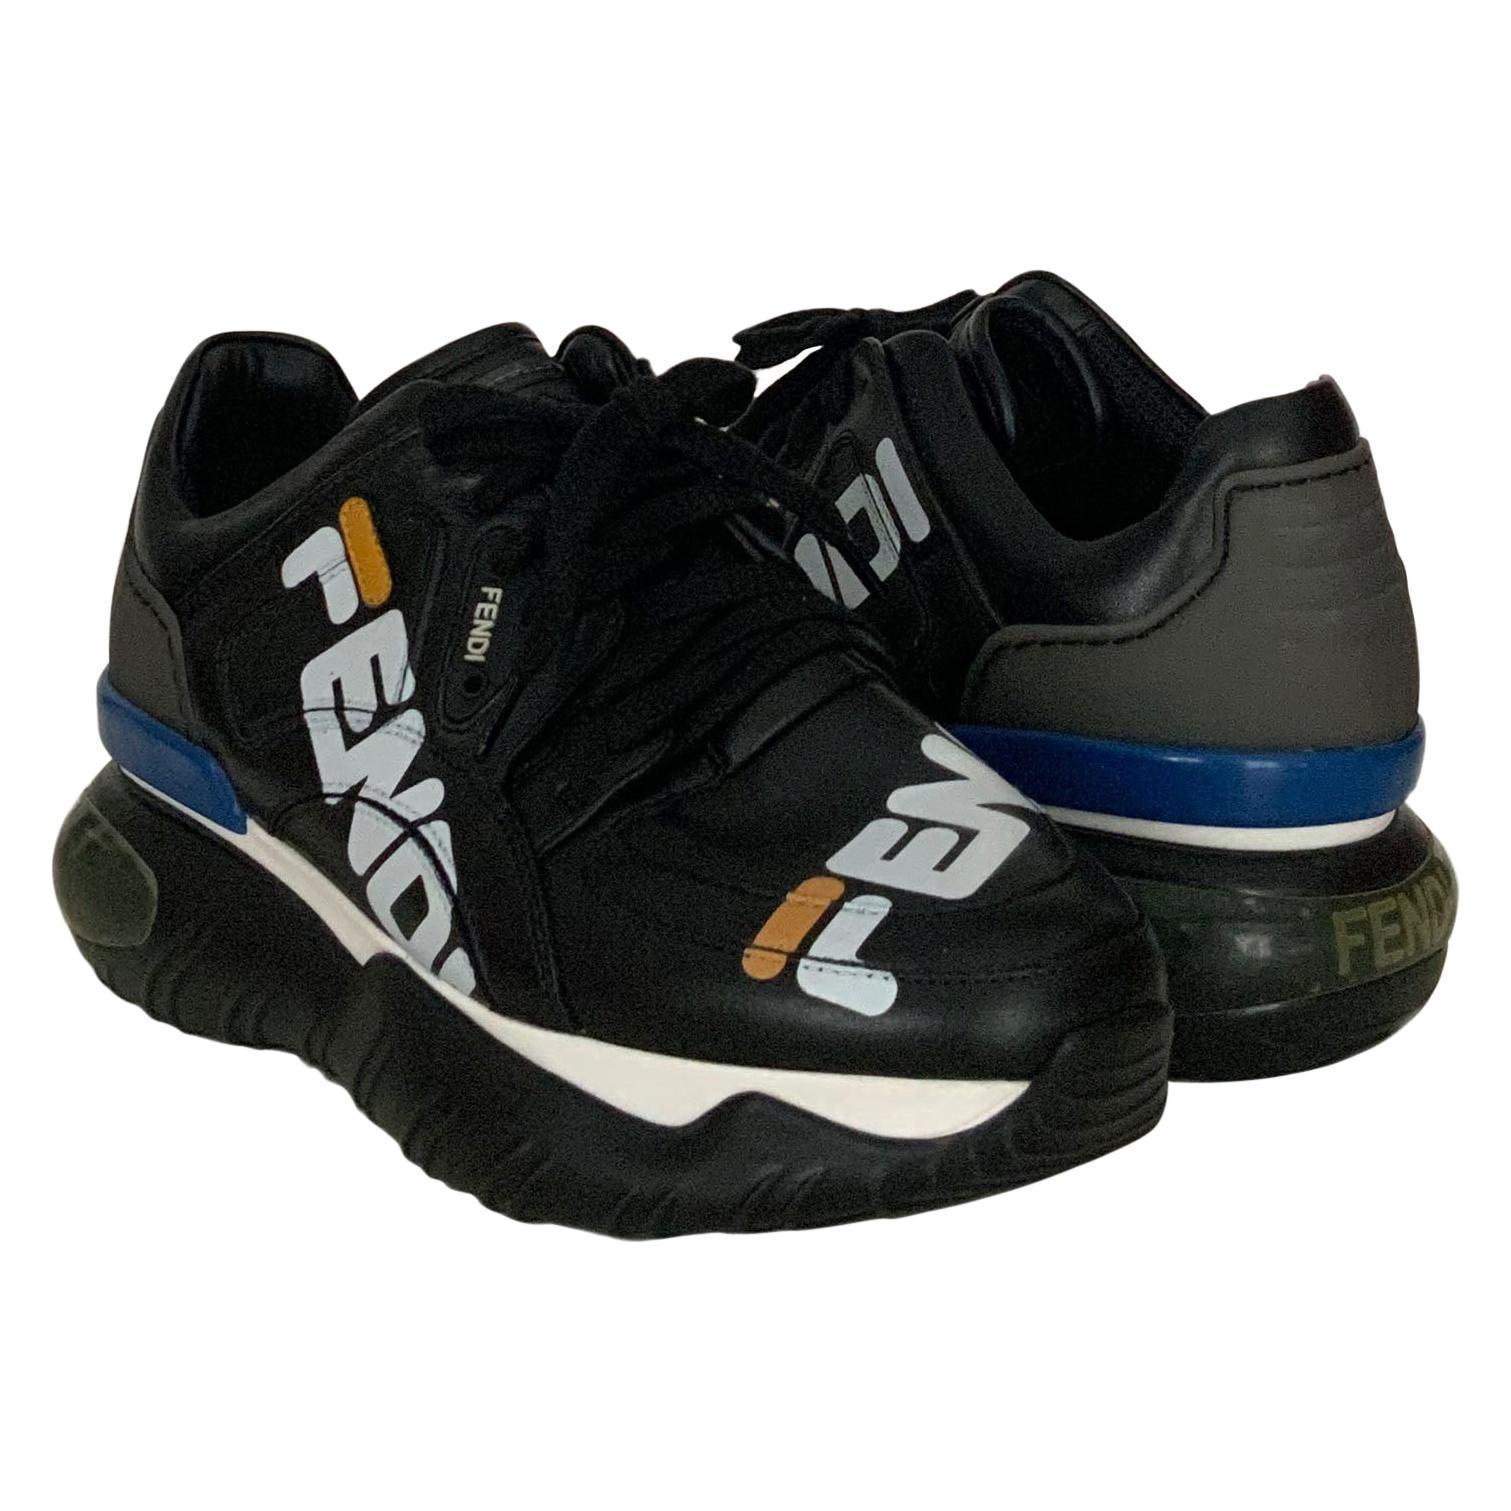 Fendi x Fila Black Leather Fila Mania Platform Sneakers